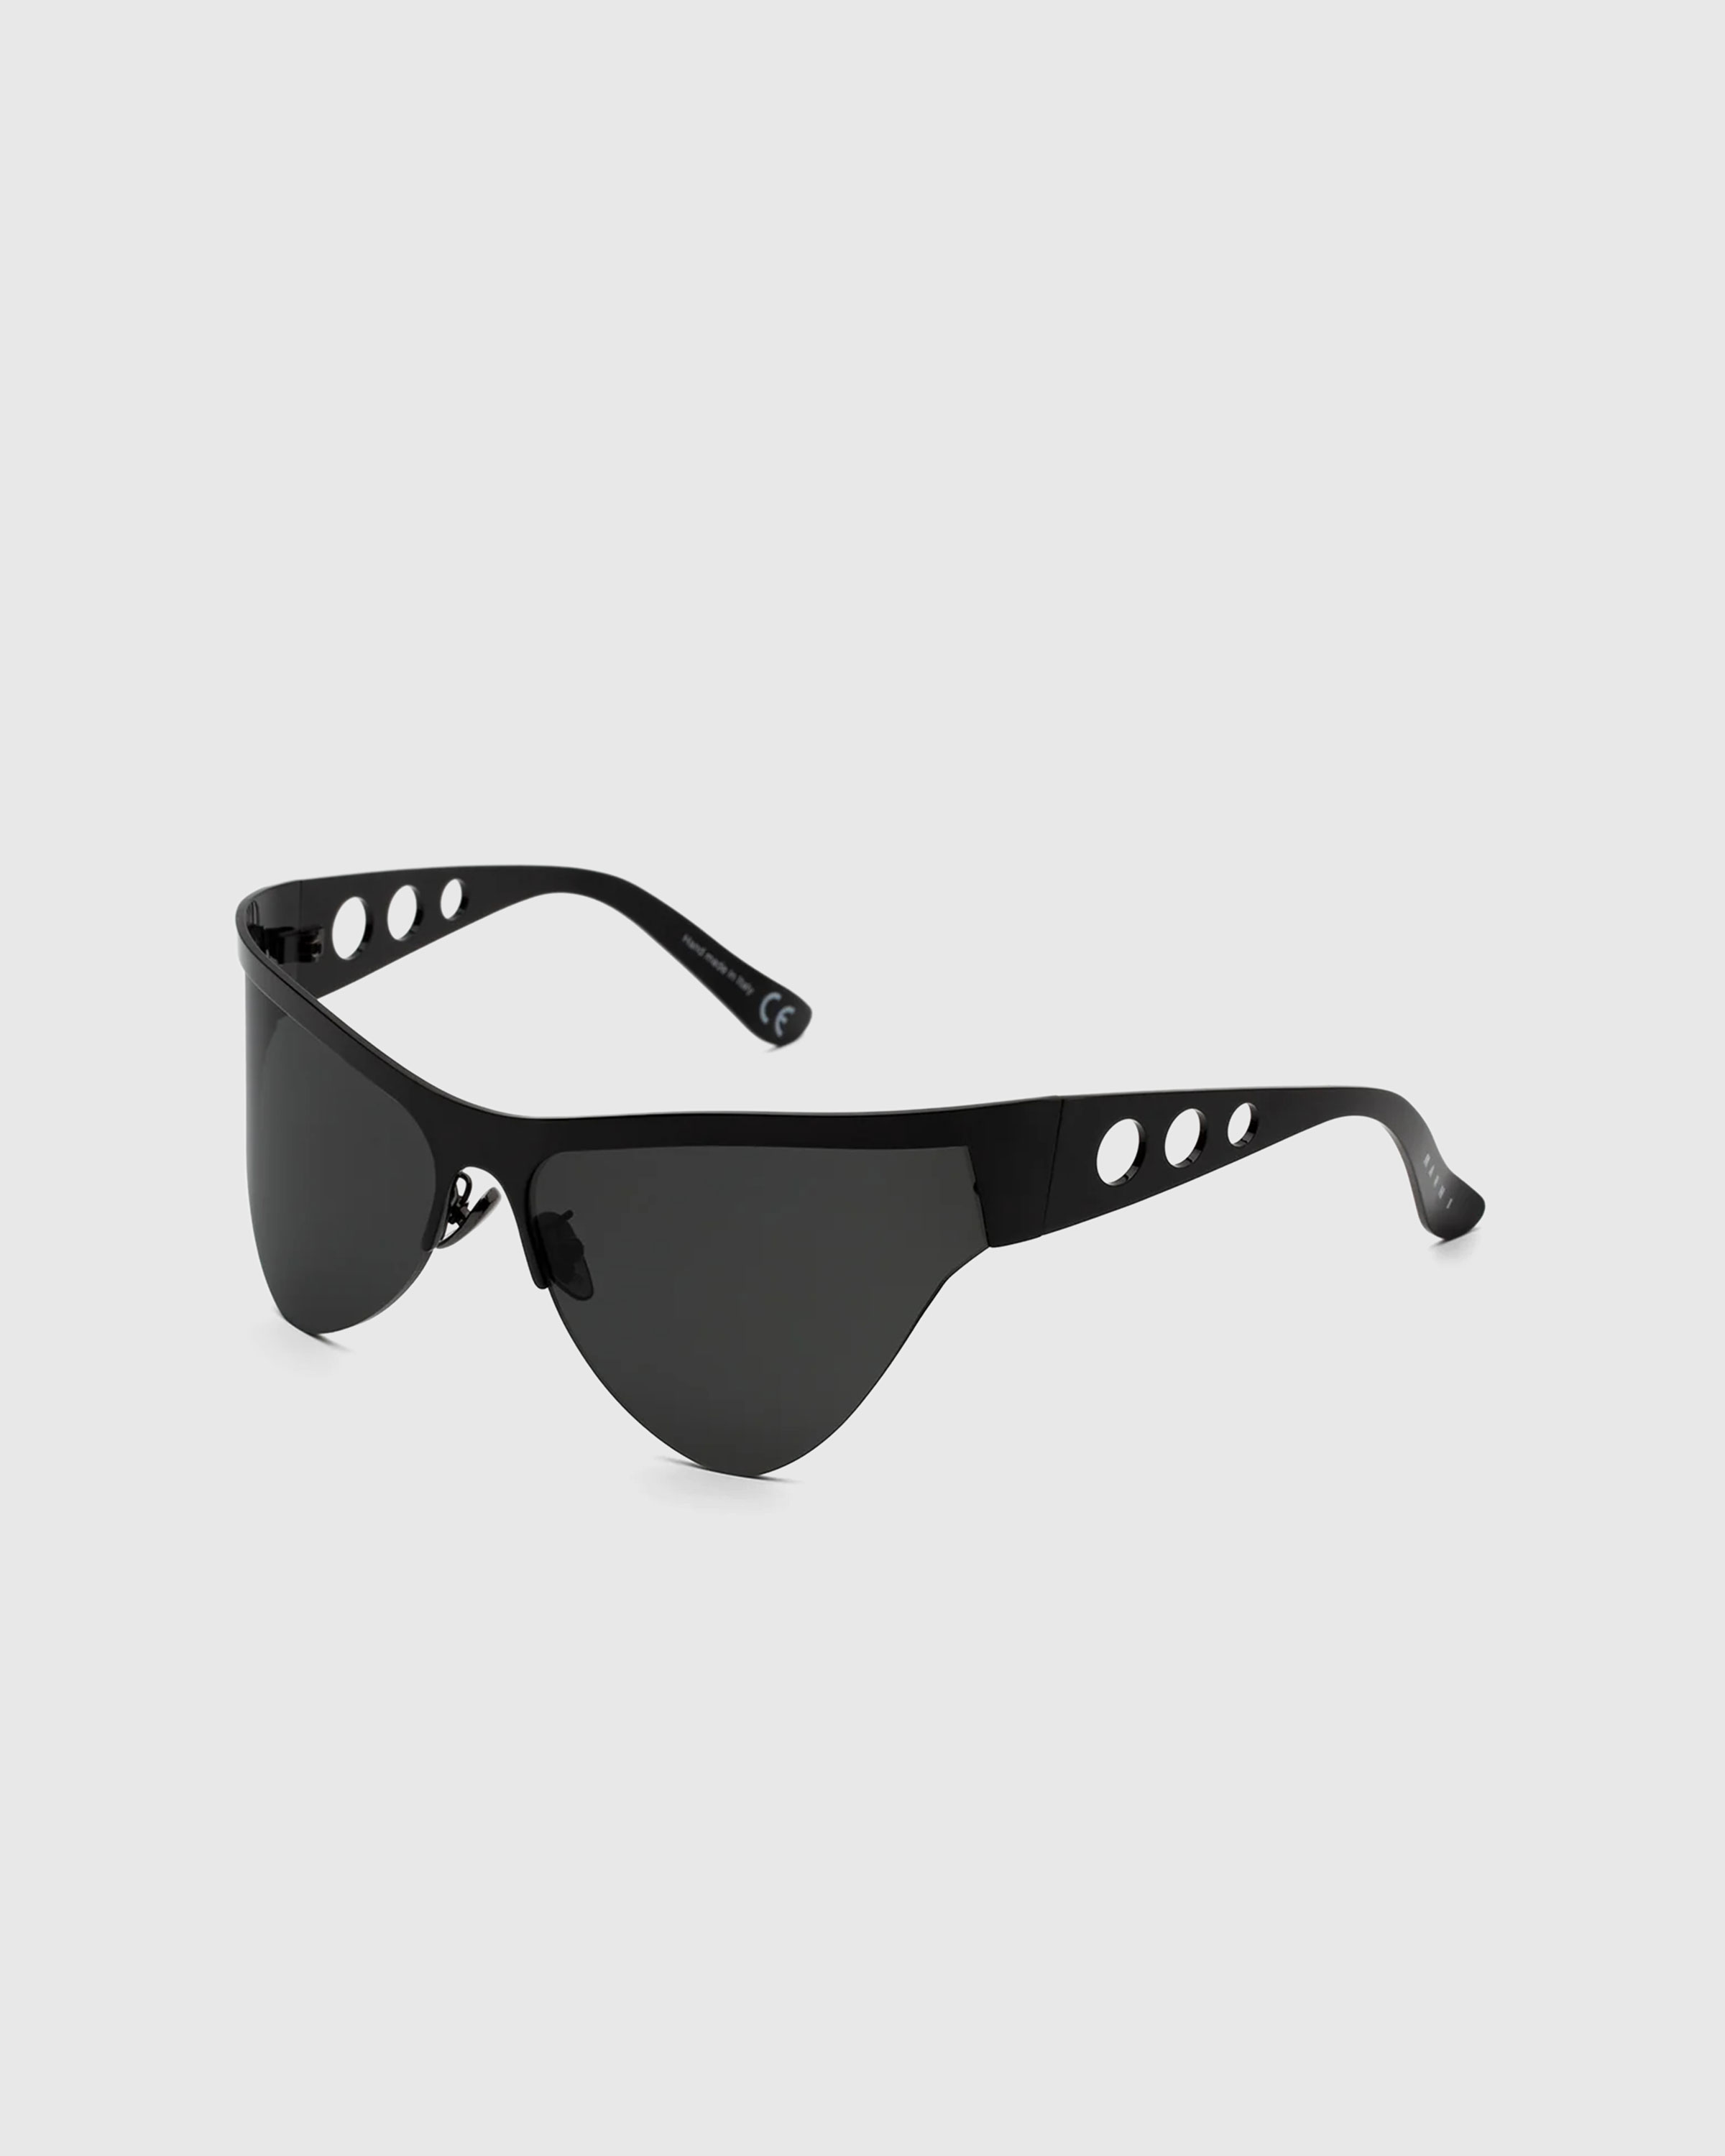 Marni x retrosuperfuture – Mauna Lola Black - Sunglasses - Black - Image 3